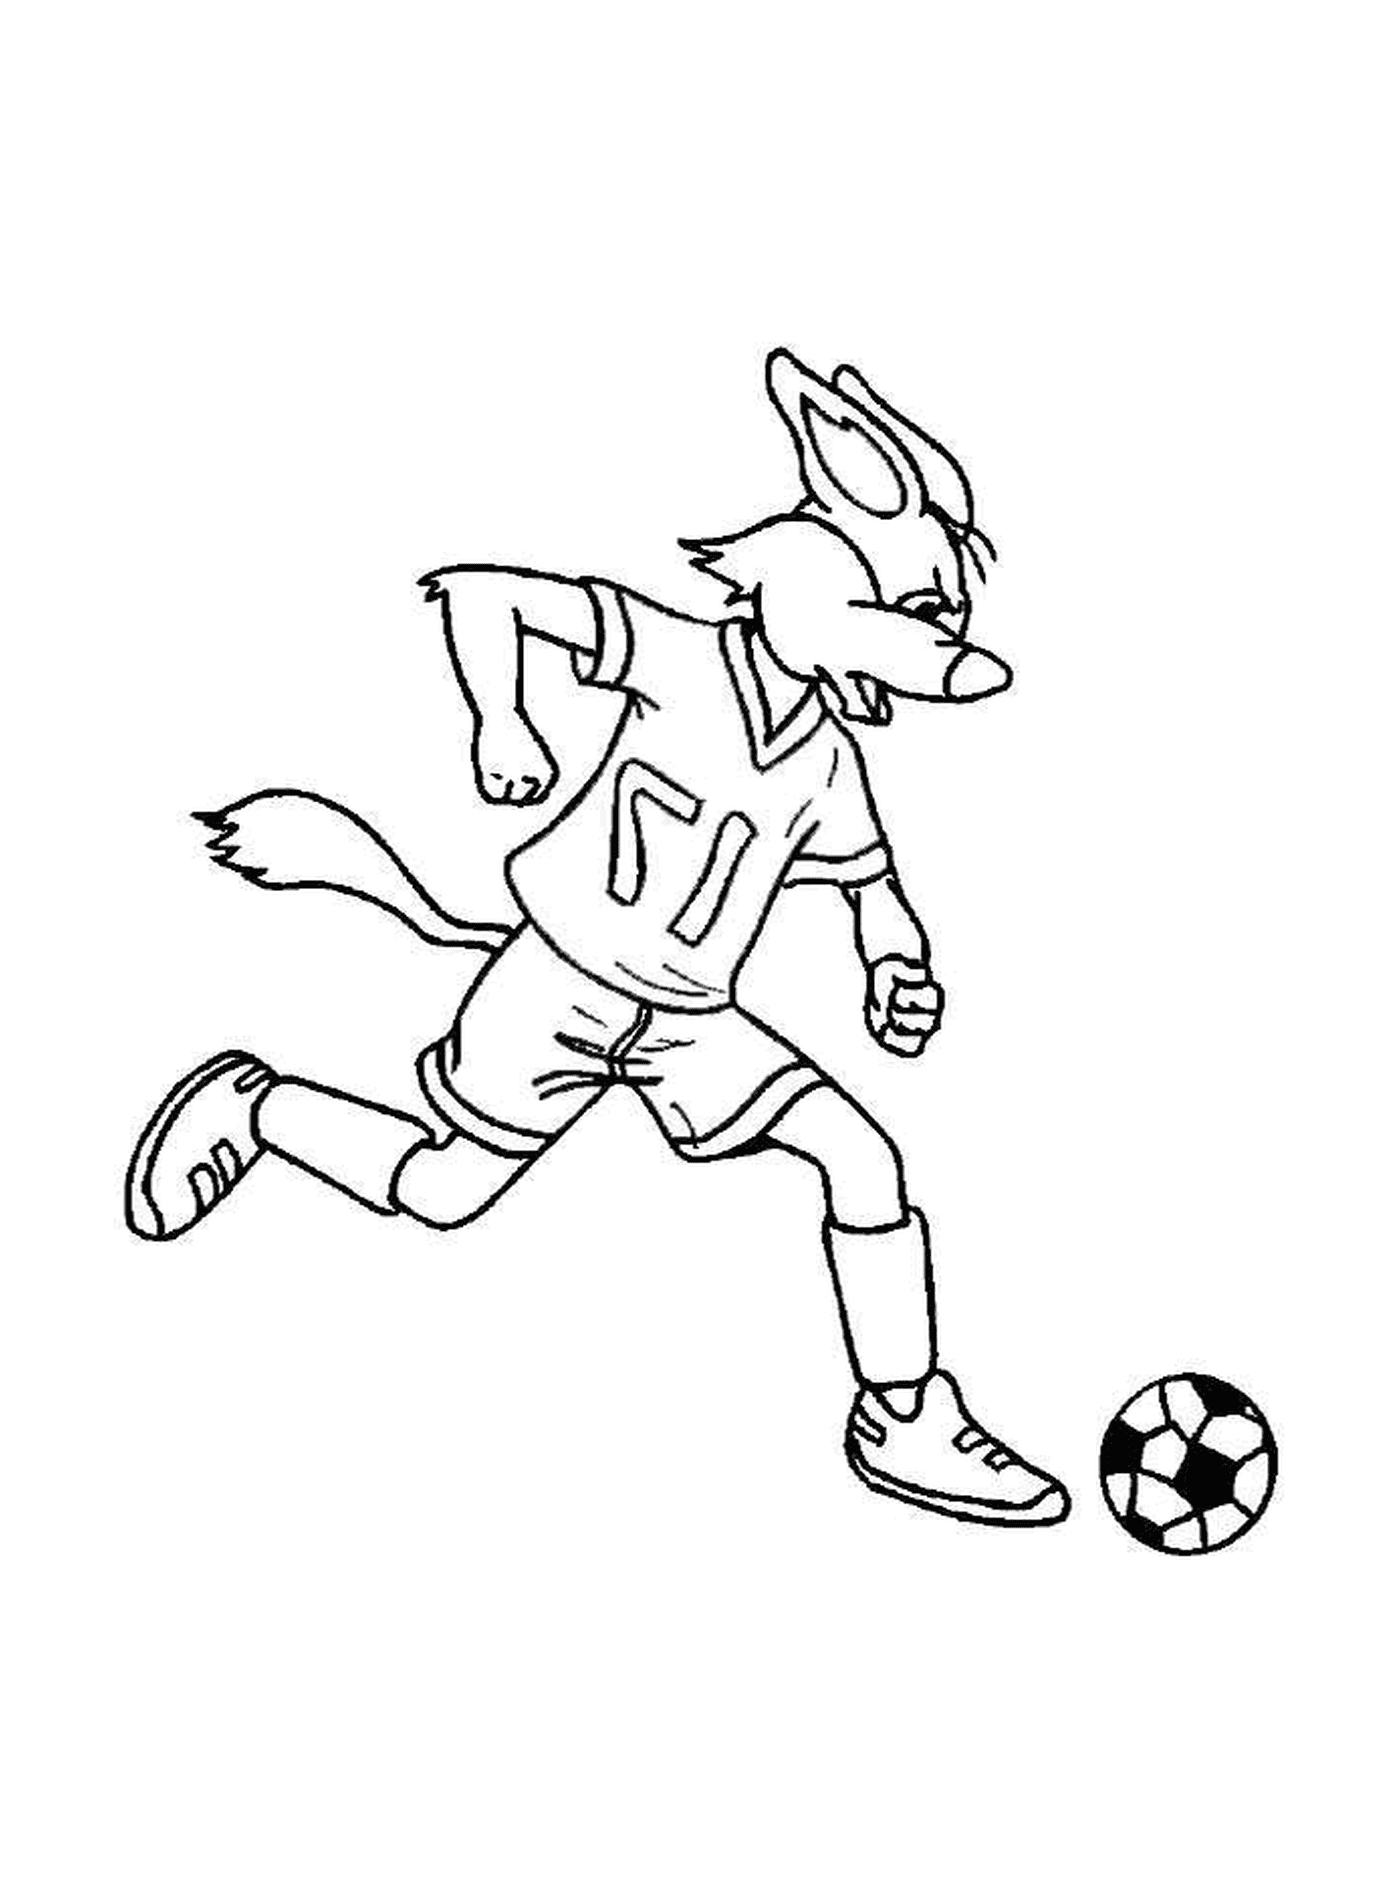 coloriage footballeur foot lapin en action